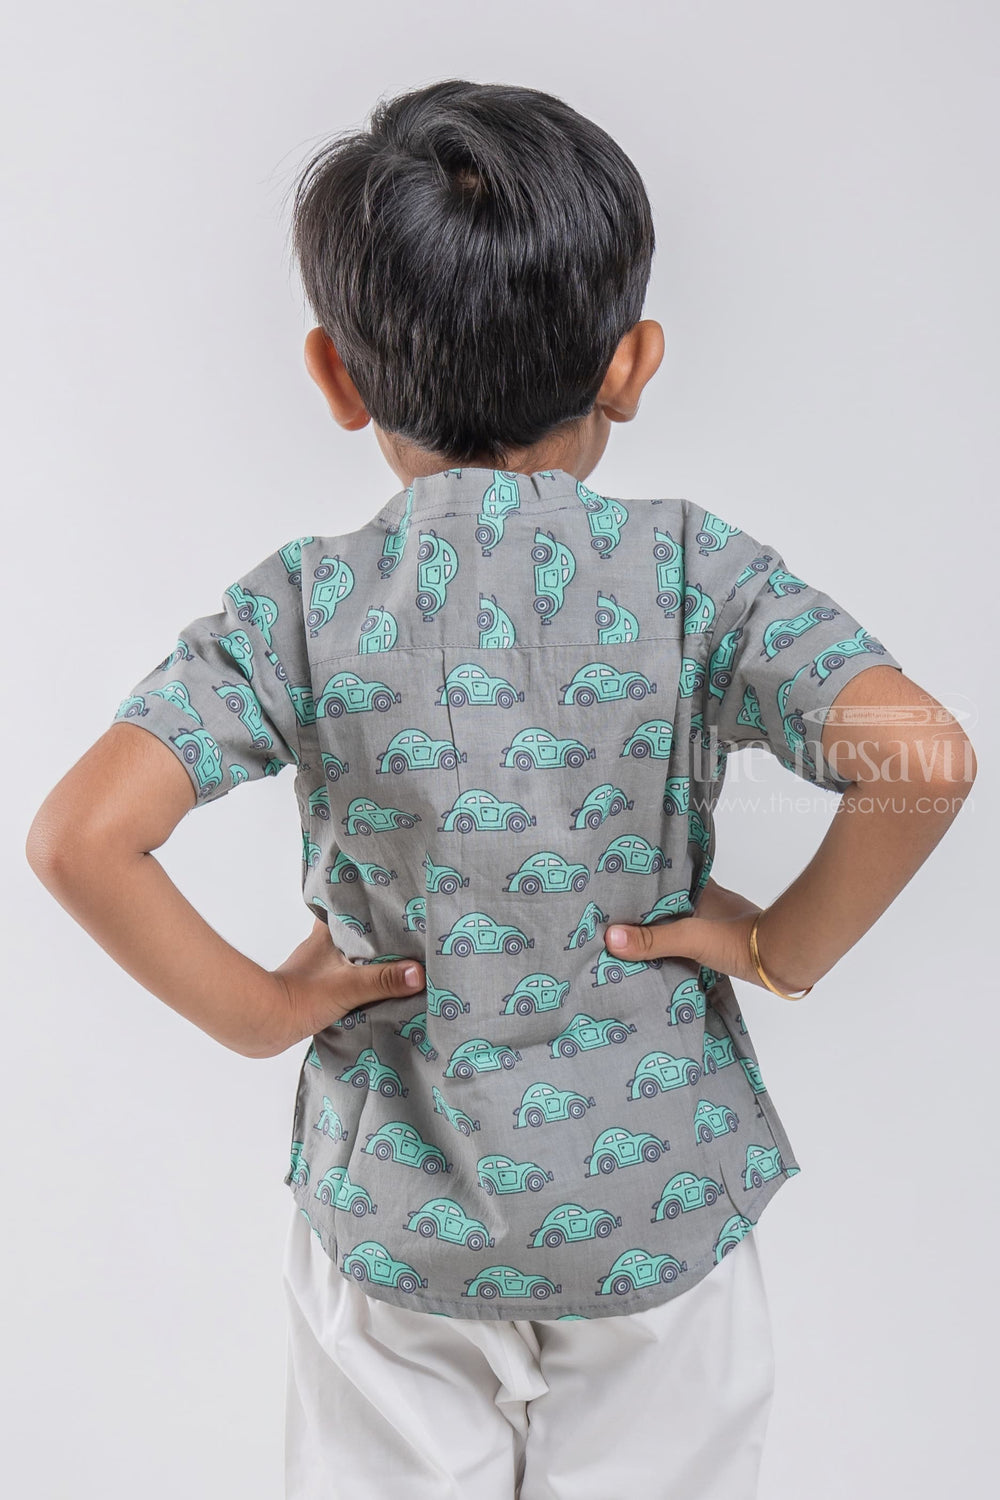 The Nesavu Boys Cotton Shirt Playwear Shirt for Boys | Mul Cotton | Nesavu | Trendy & Playful Kids' Fashion psr silks Nesavu